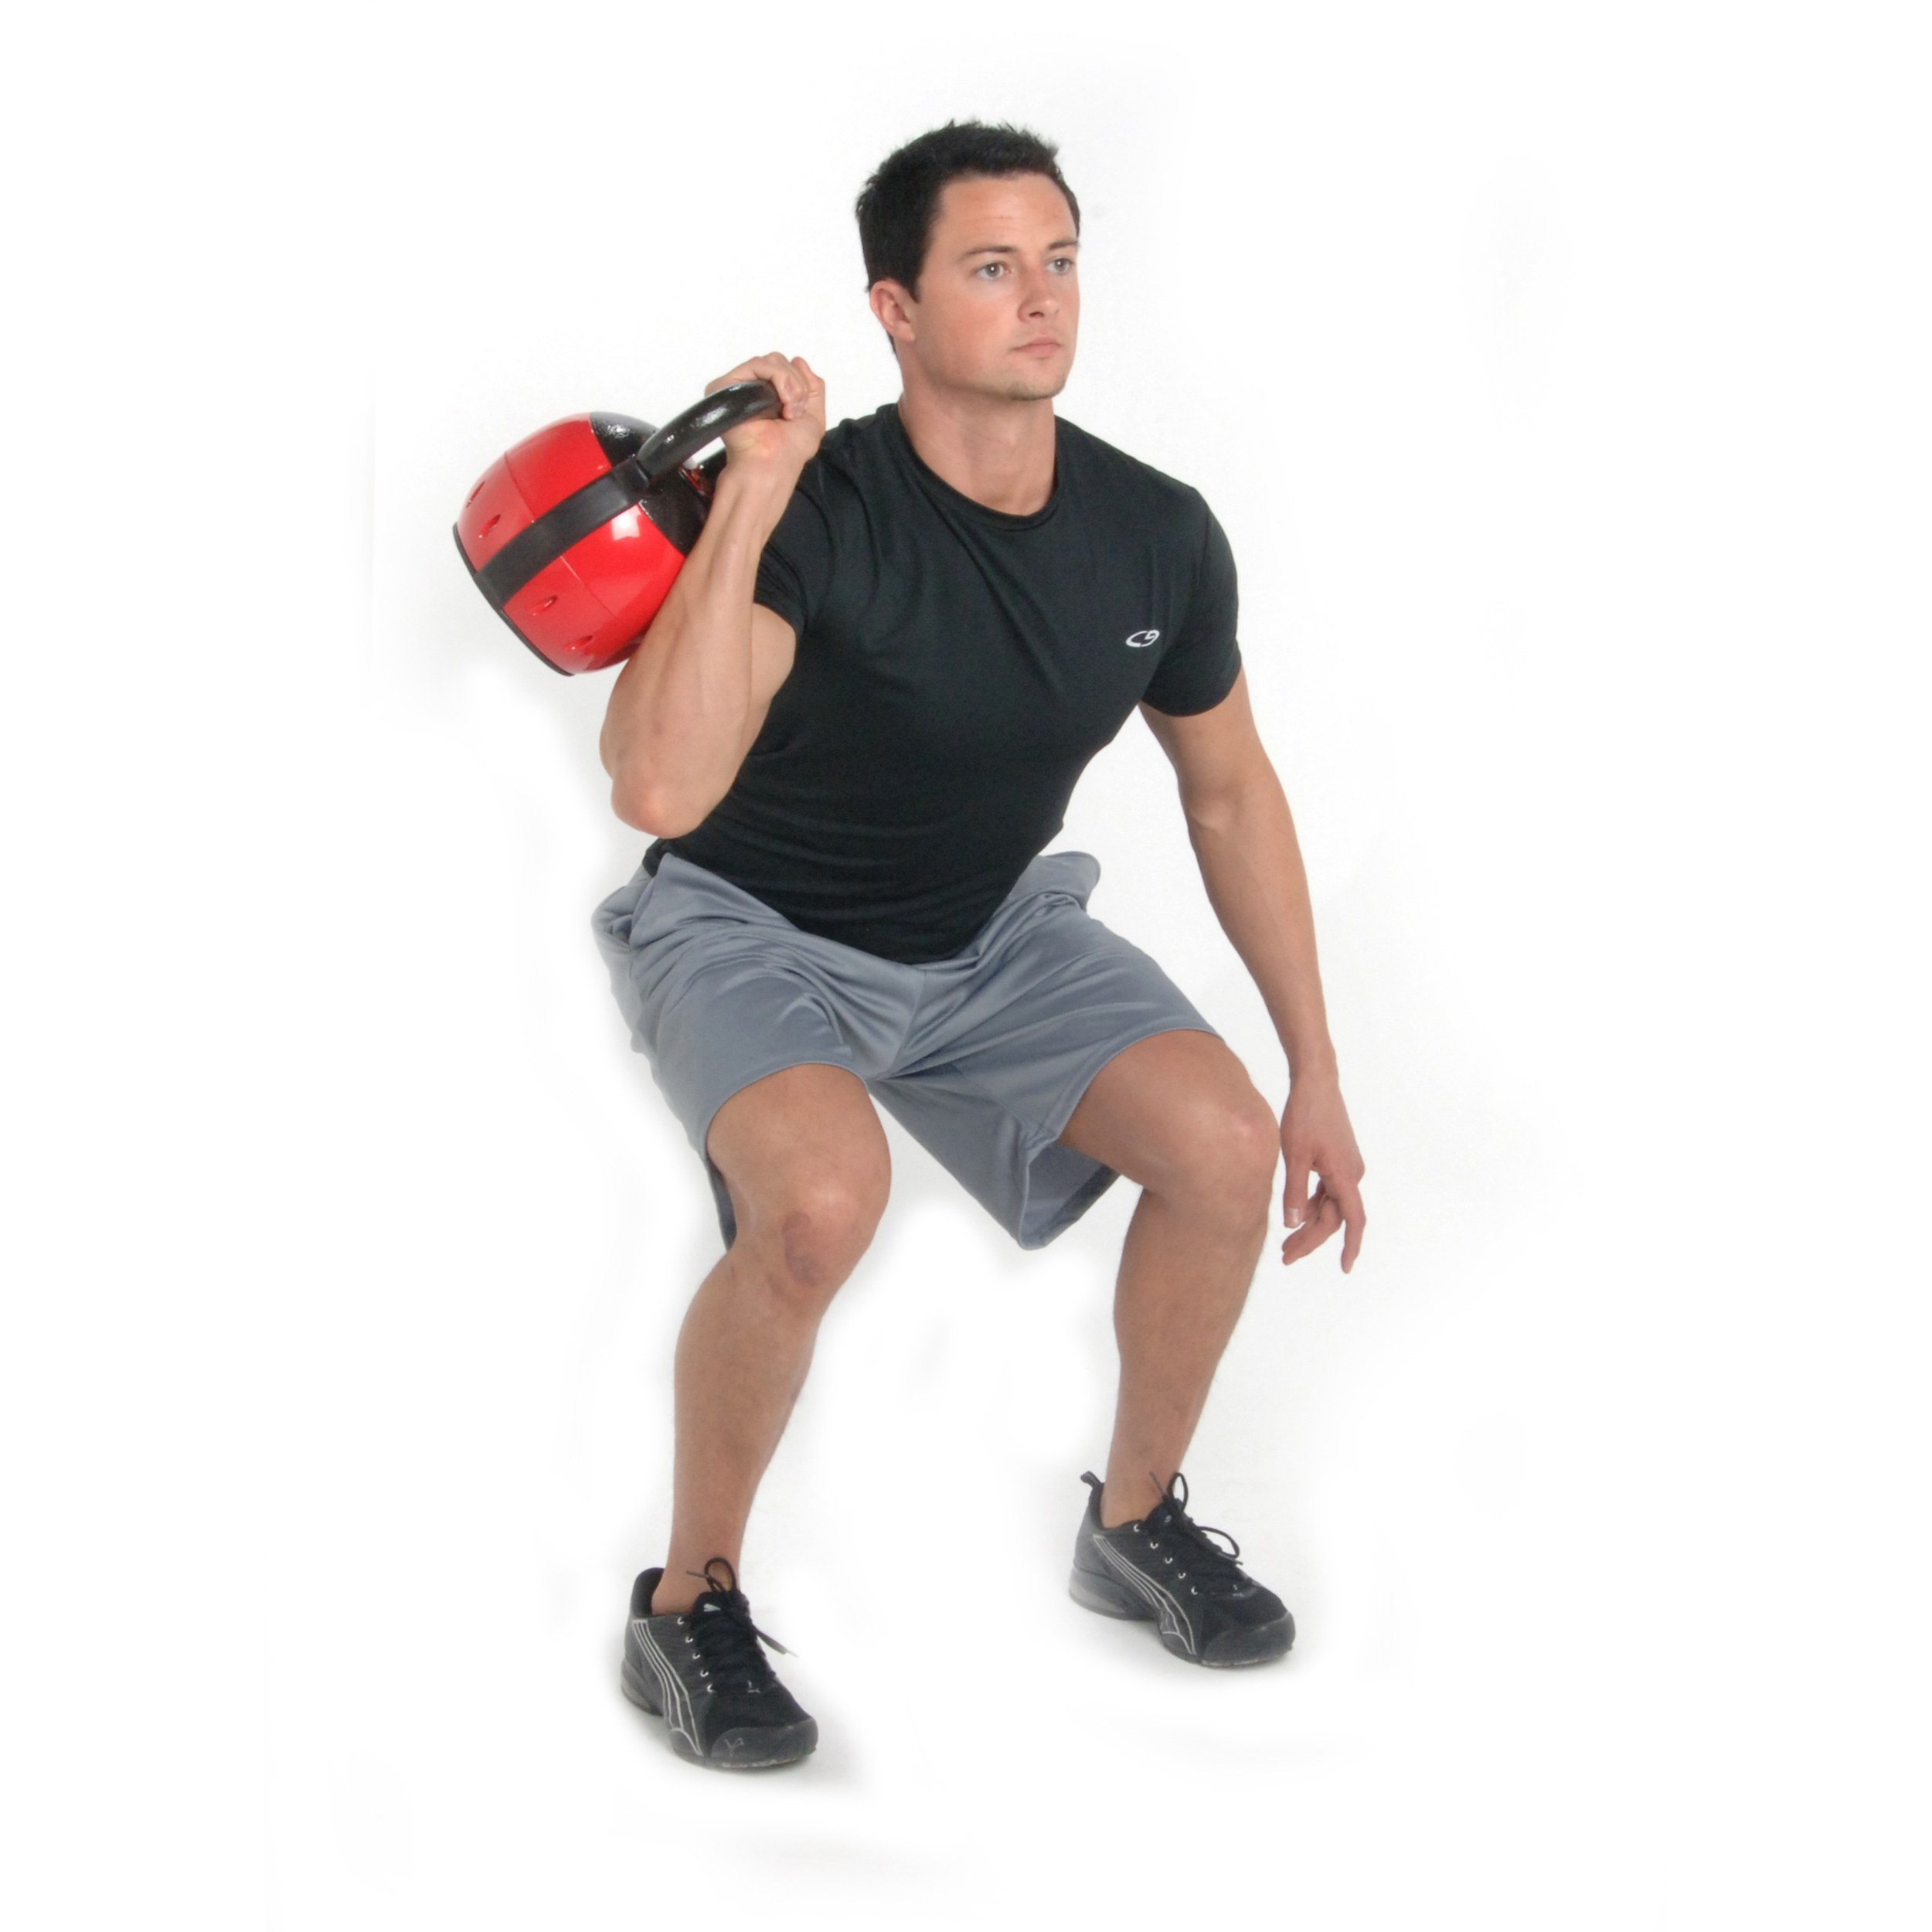 Stamina X Kettle Versa-Bell - 36 lbs Strength Training Kettlebell -  Adjustable Kettlebell Weights with Smart Workout App - Kettlebell Weights  for Home